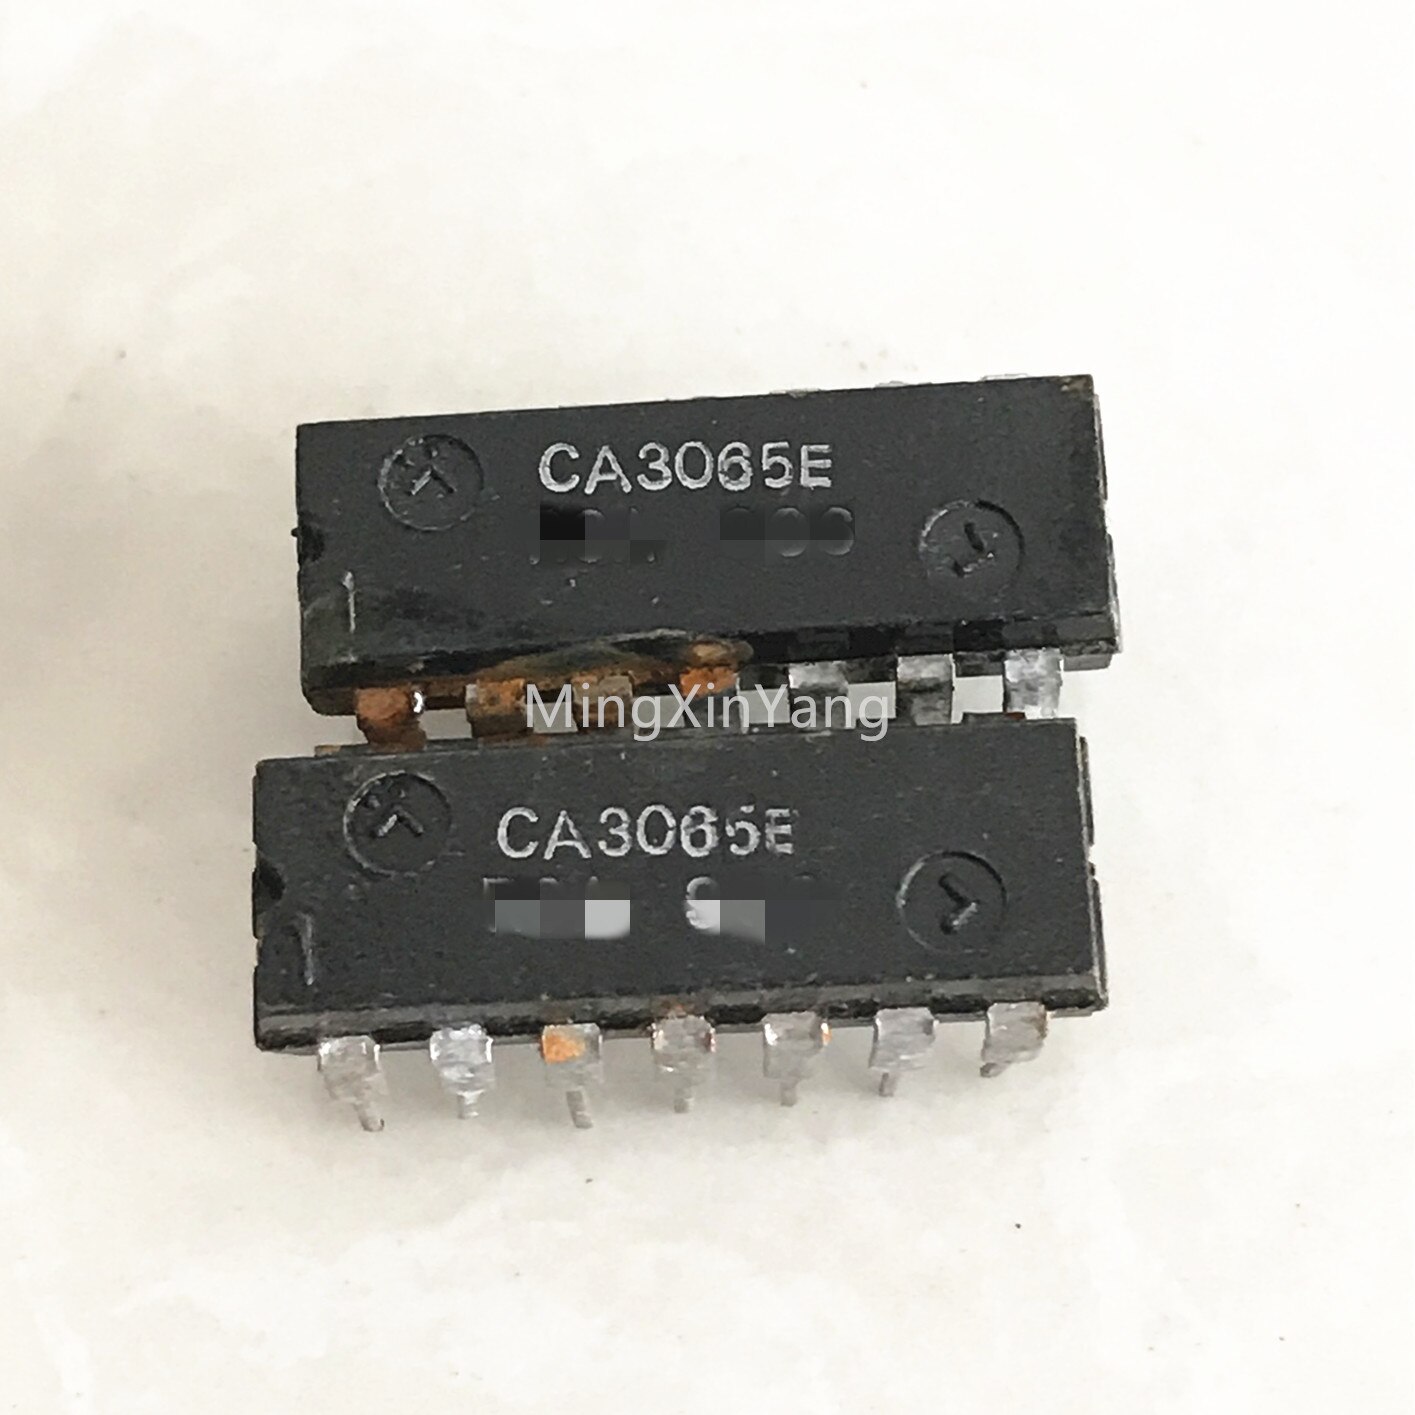 CA3065E DIP-14 집적 회로 IC 칩, 2 개